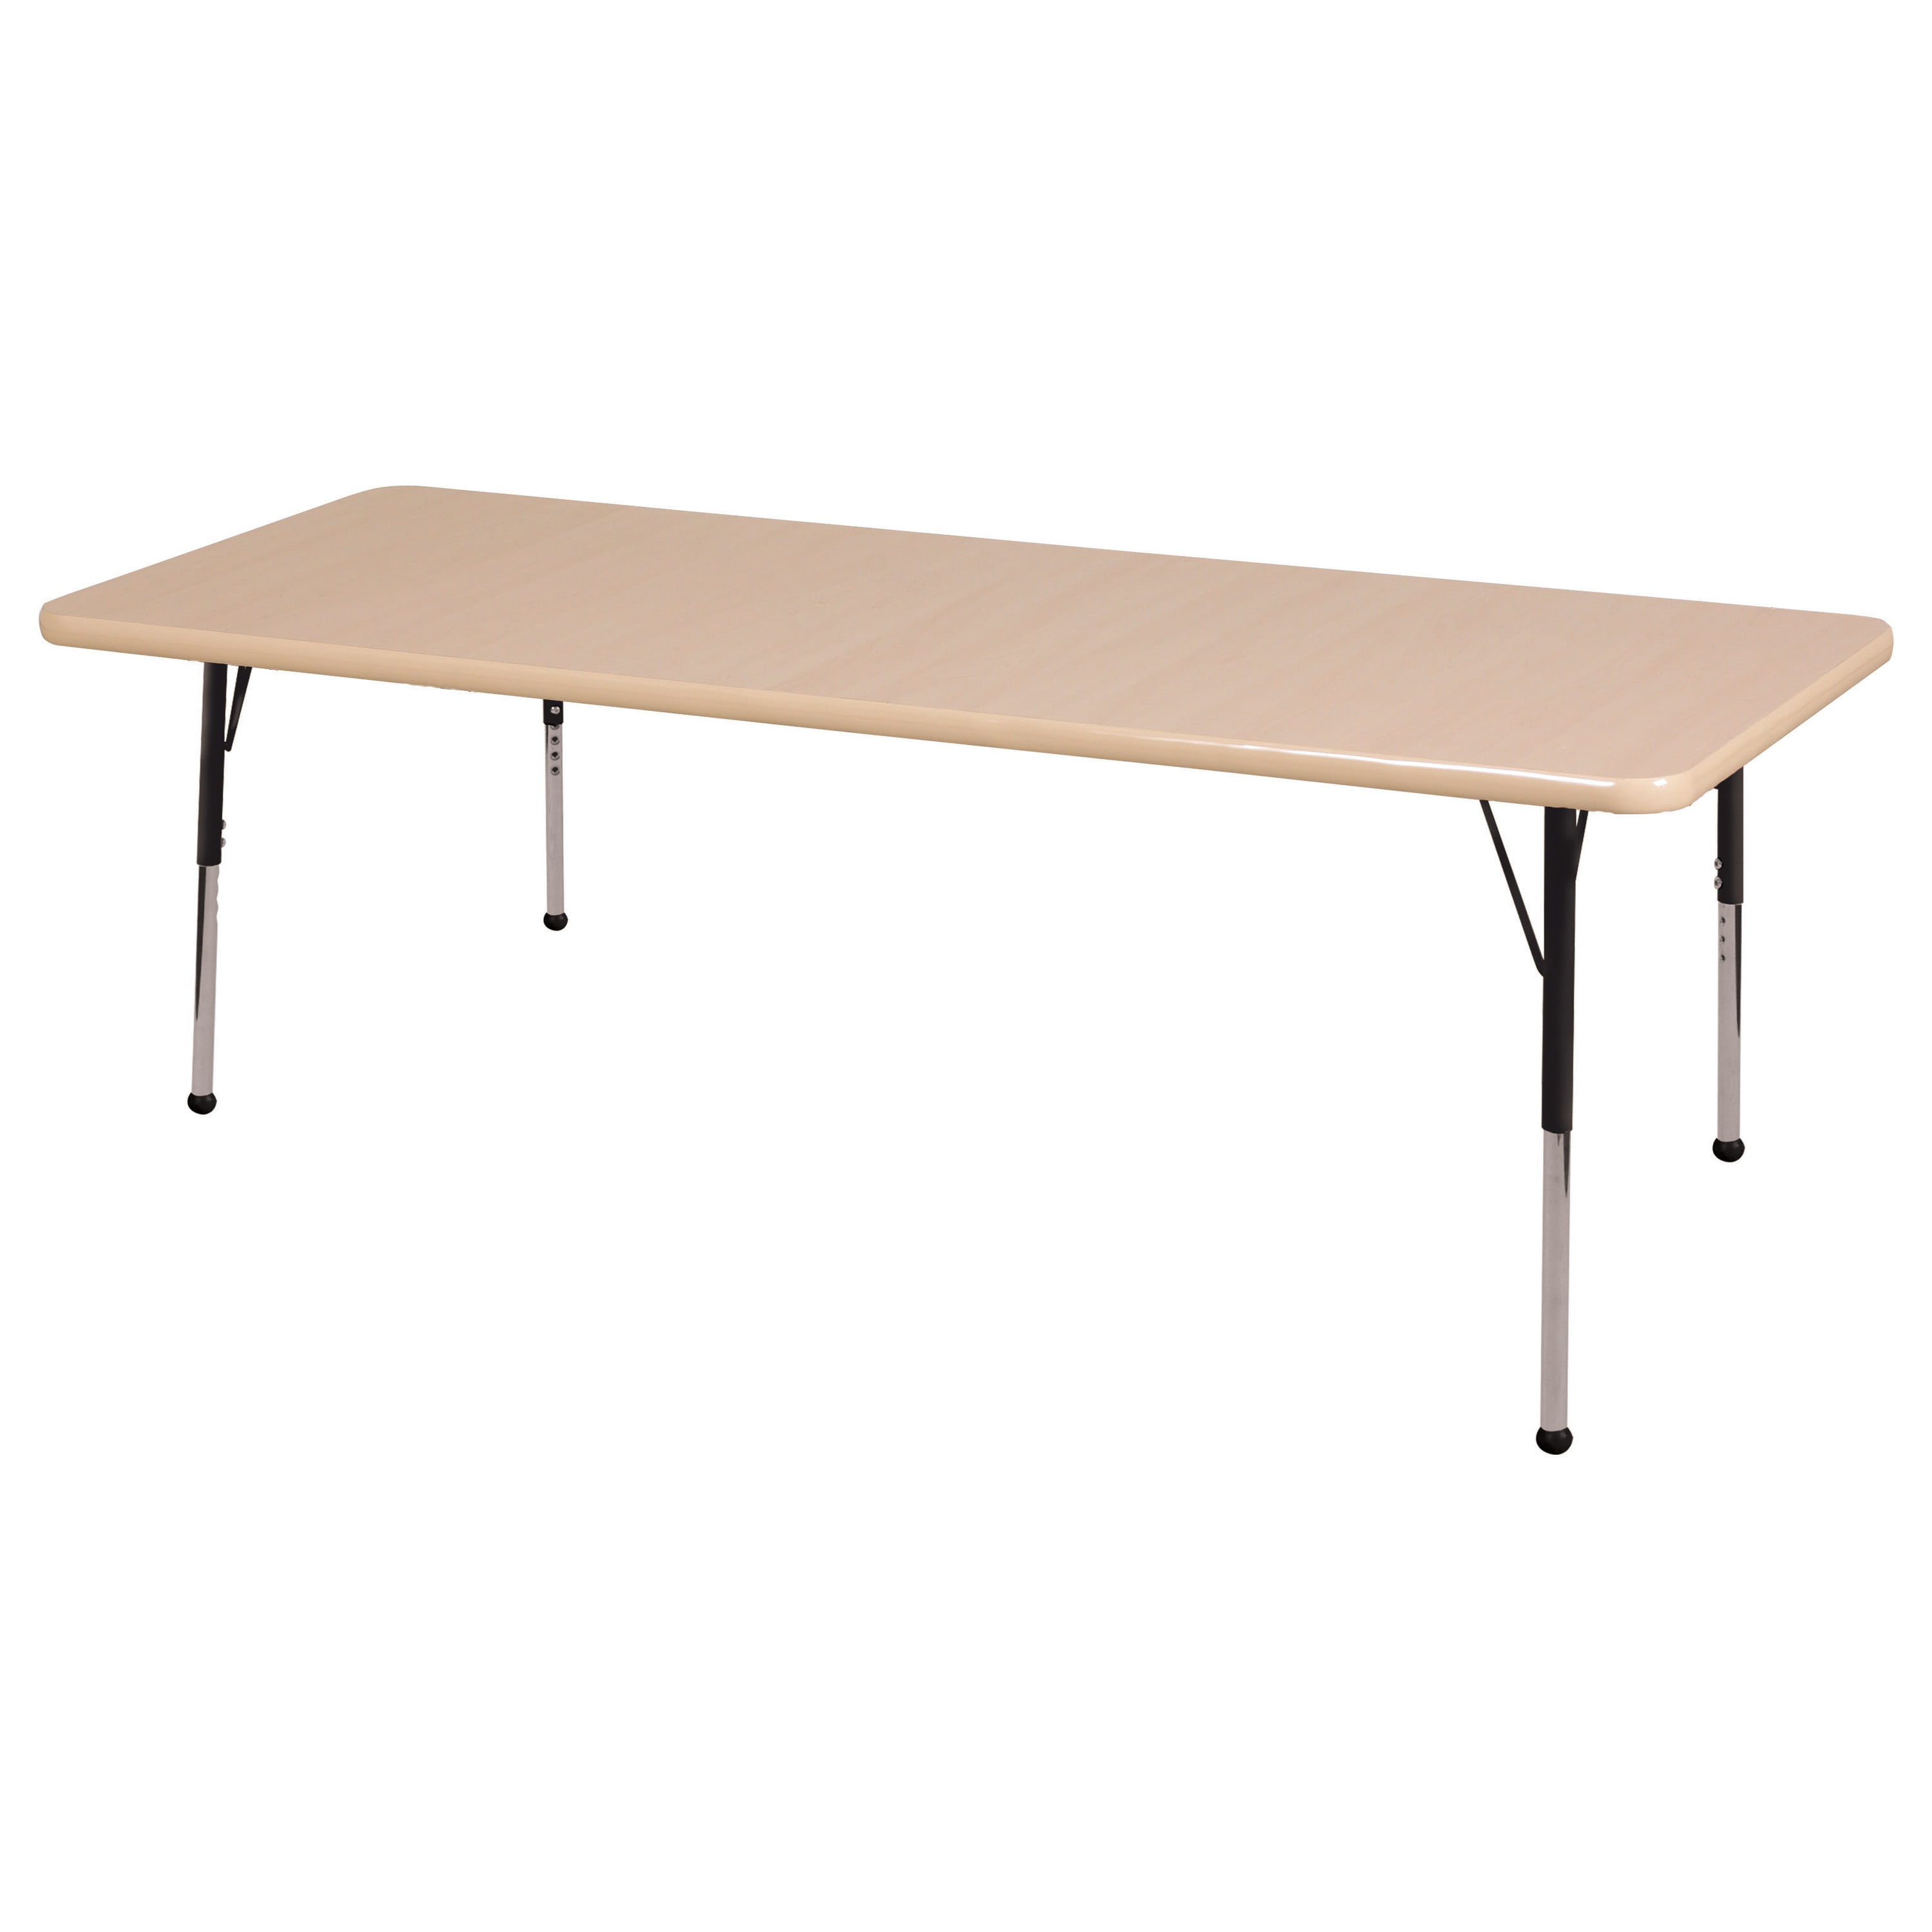 ECR4Kids T-Mold 30 x 72 Rectangular Activity School Table Maple/Green/Sand Toddler Legs w/Ball Glides Adjustable Height 15-23 inch 